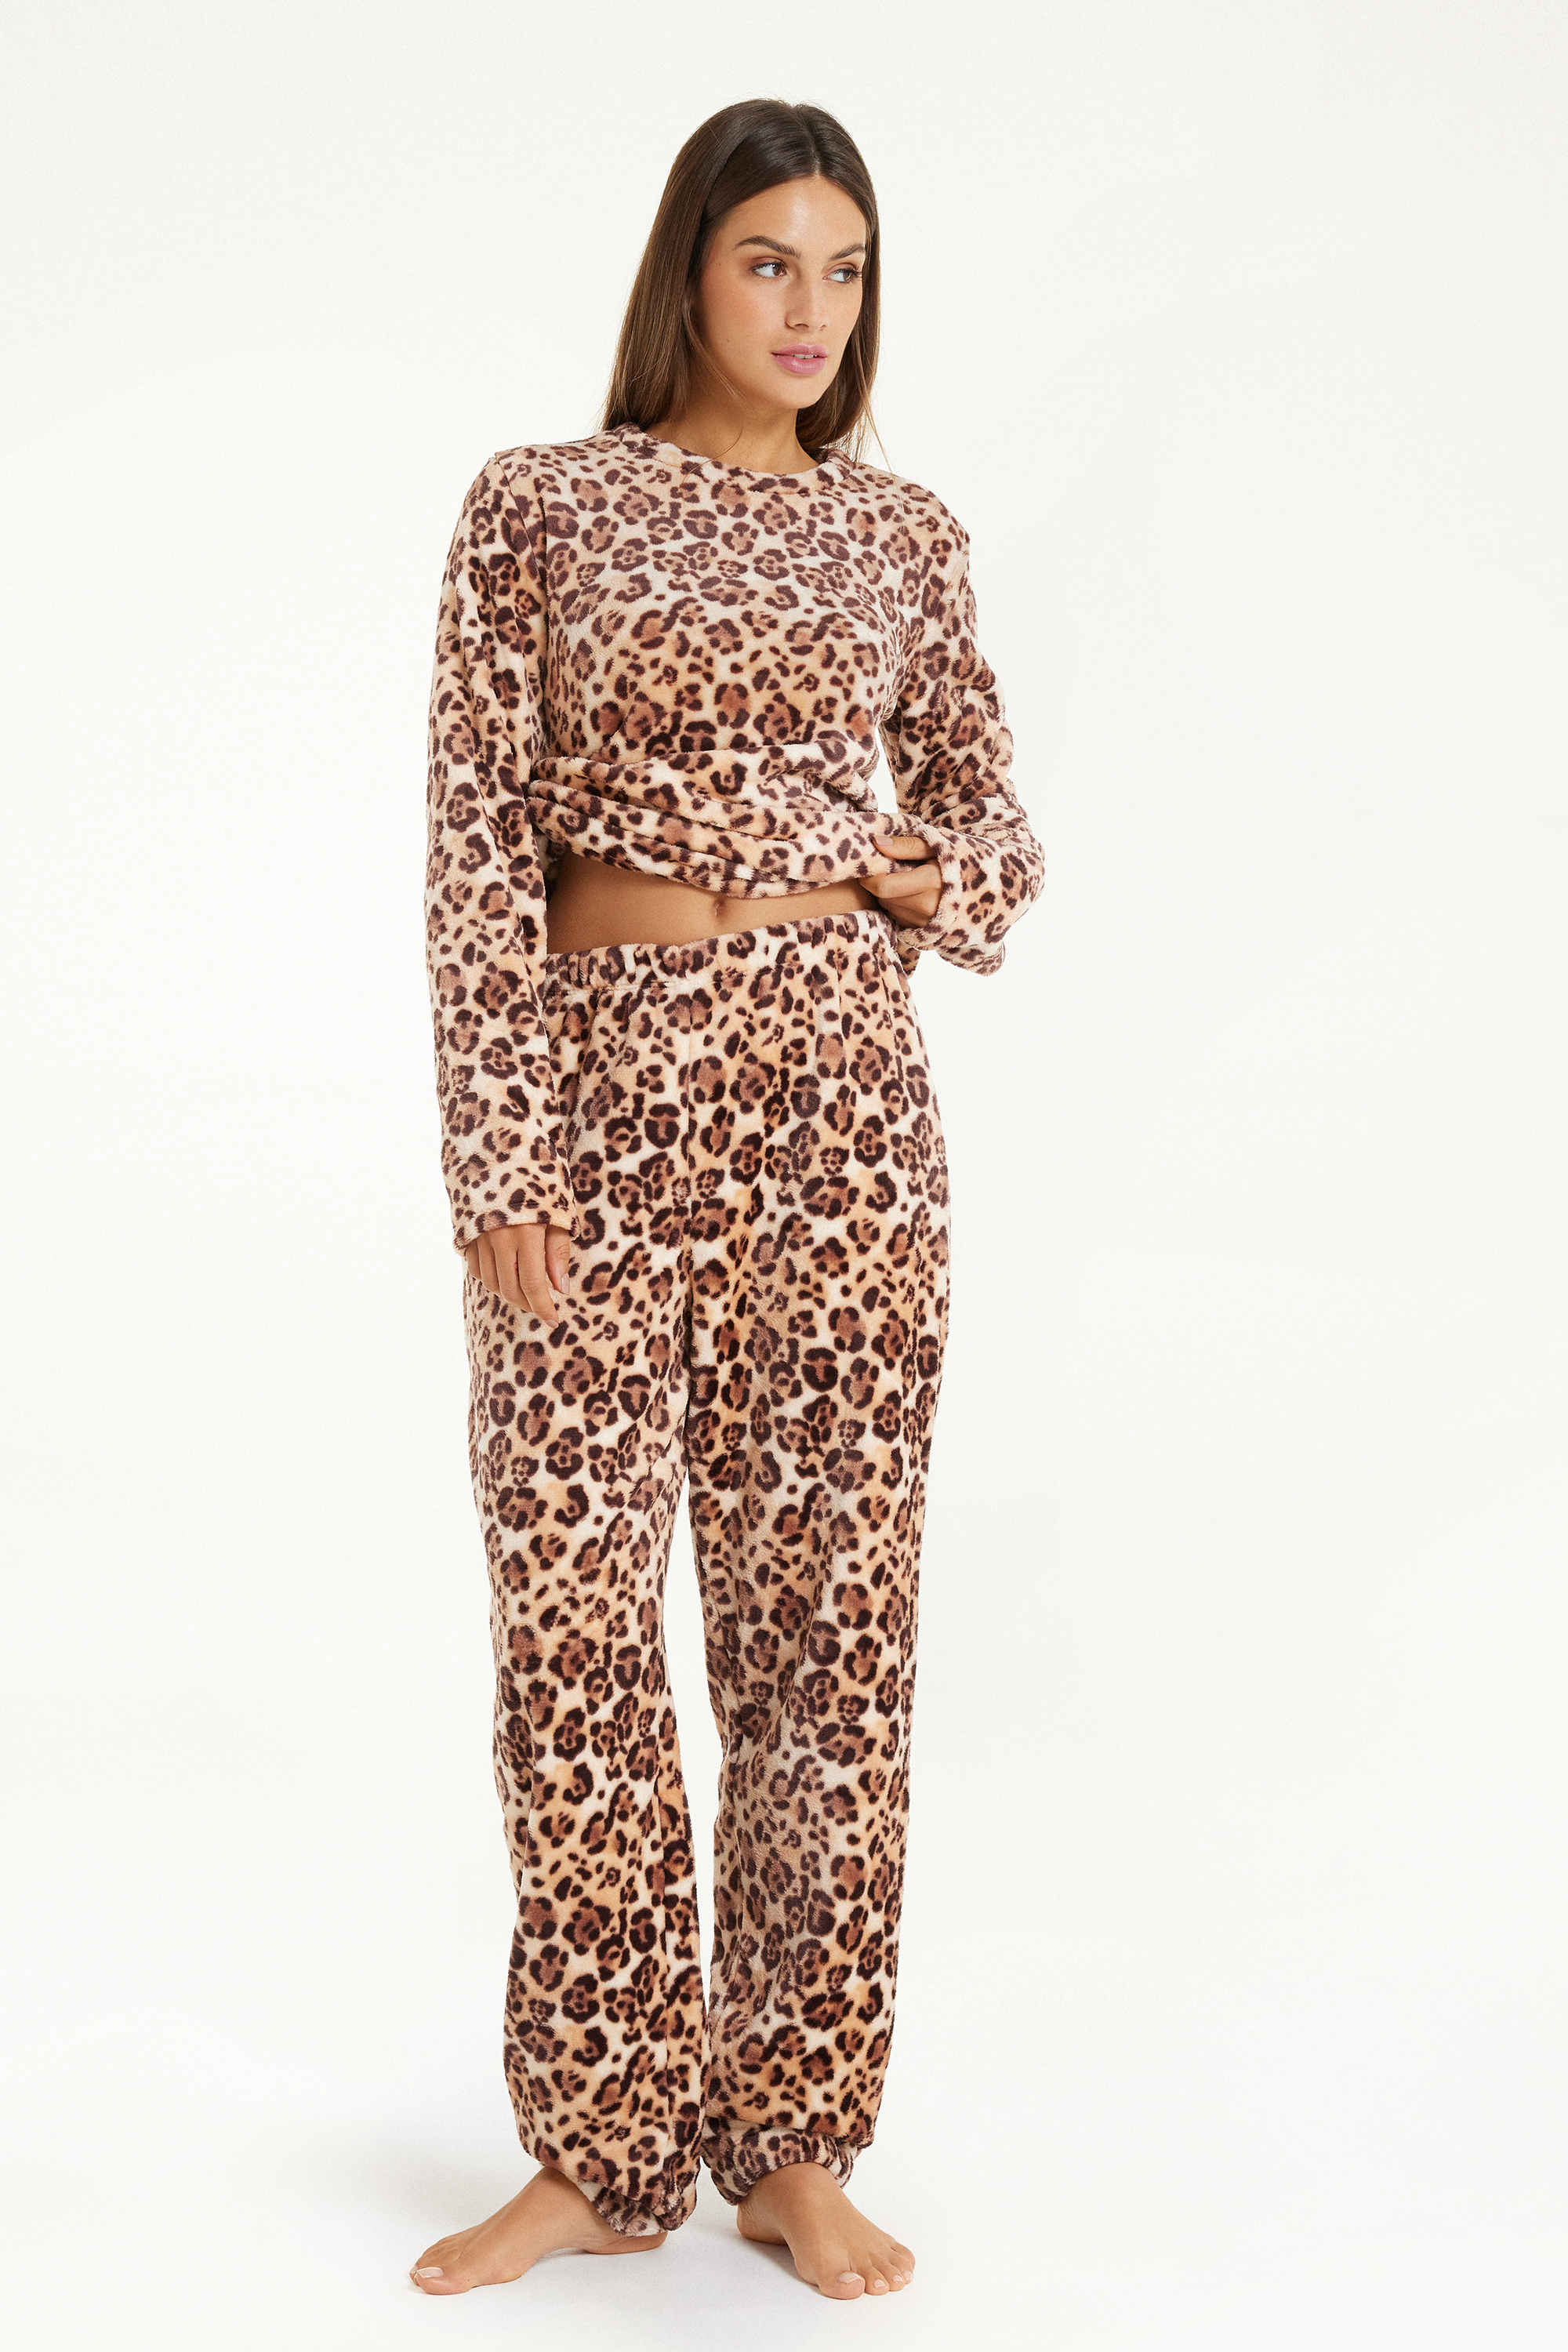 Langer Pyjama aus Fleece mit Leopardenprint